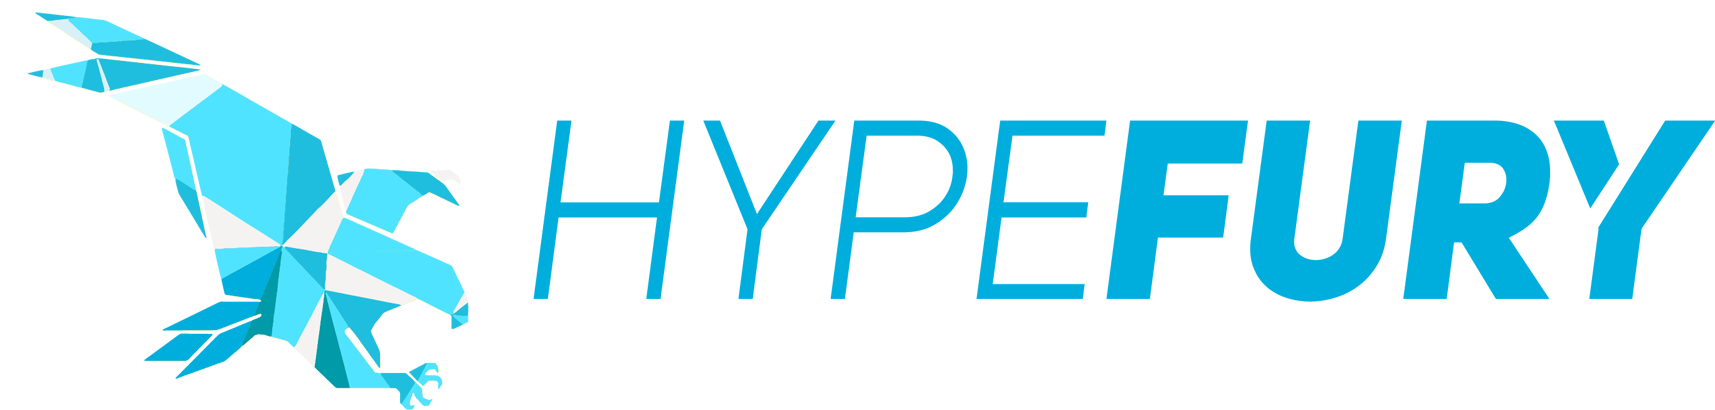 hypefury logo